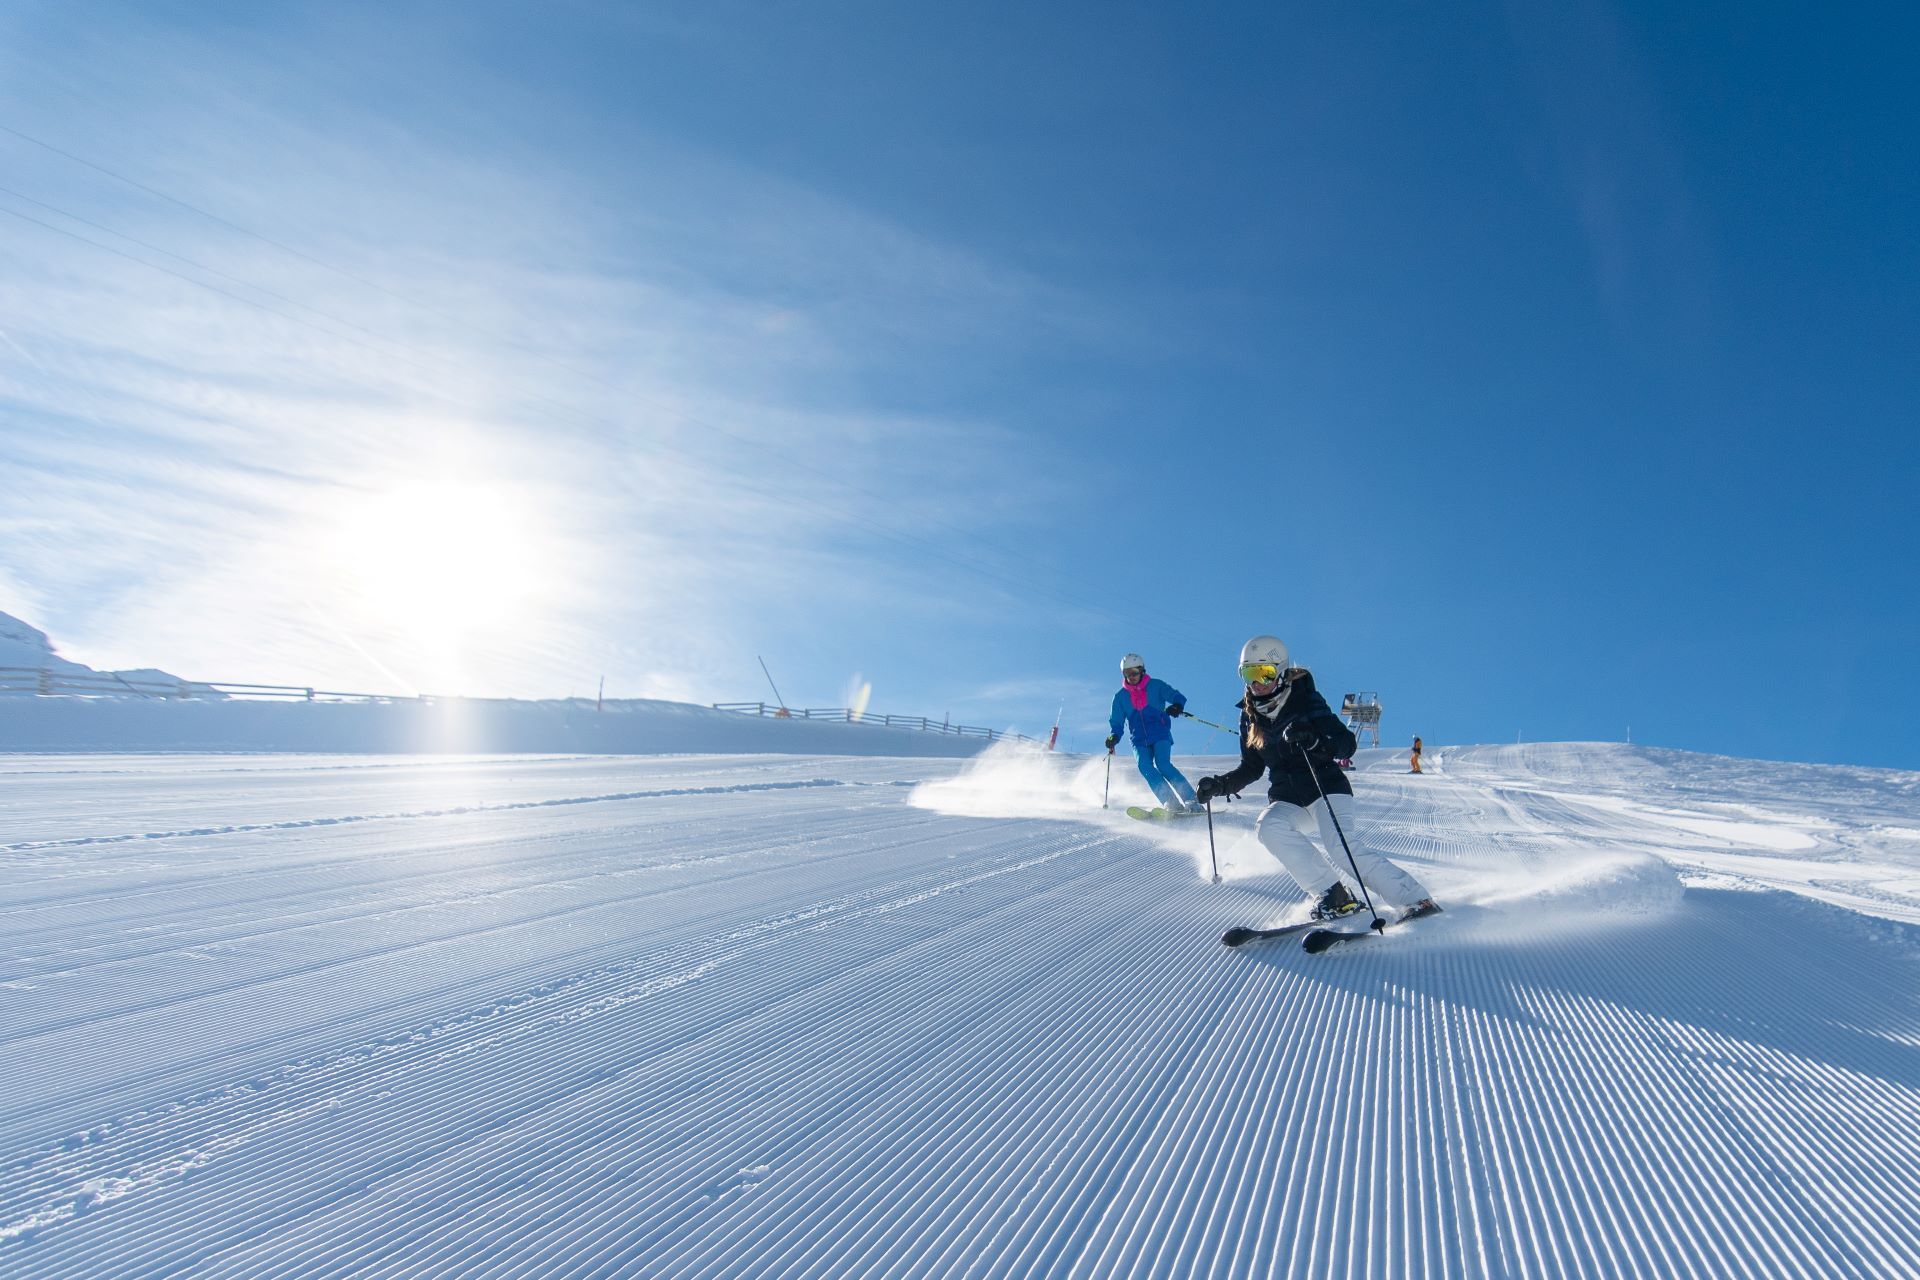 valthorens-piste-montagne-3vallees-alpes-oxygene-ski-collection 